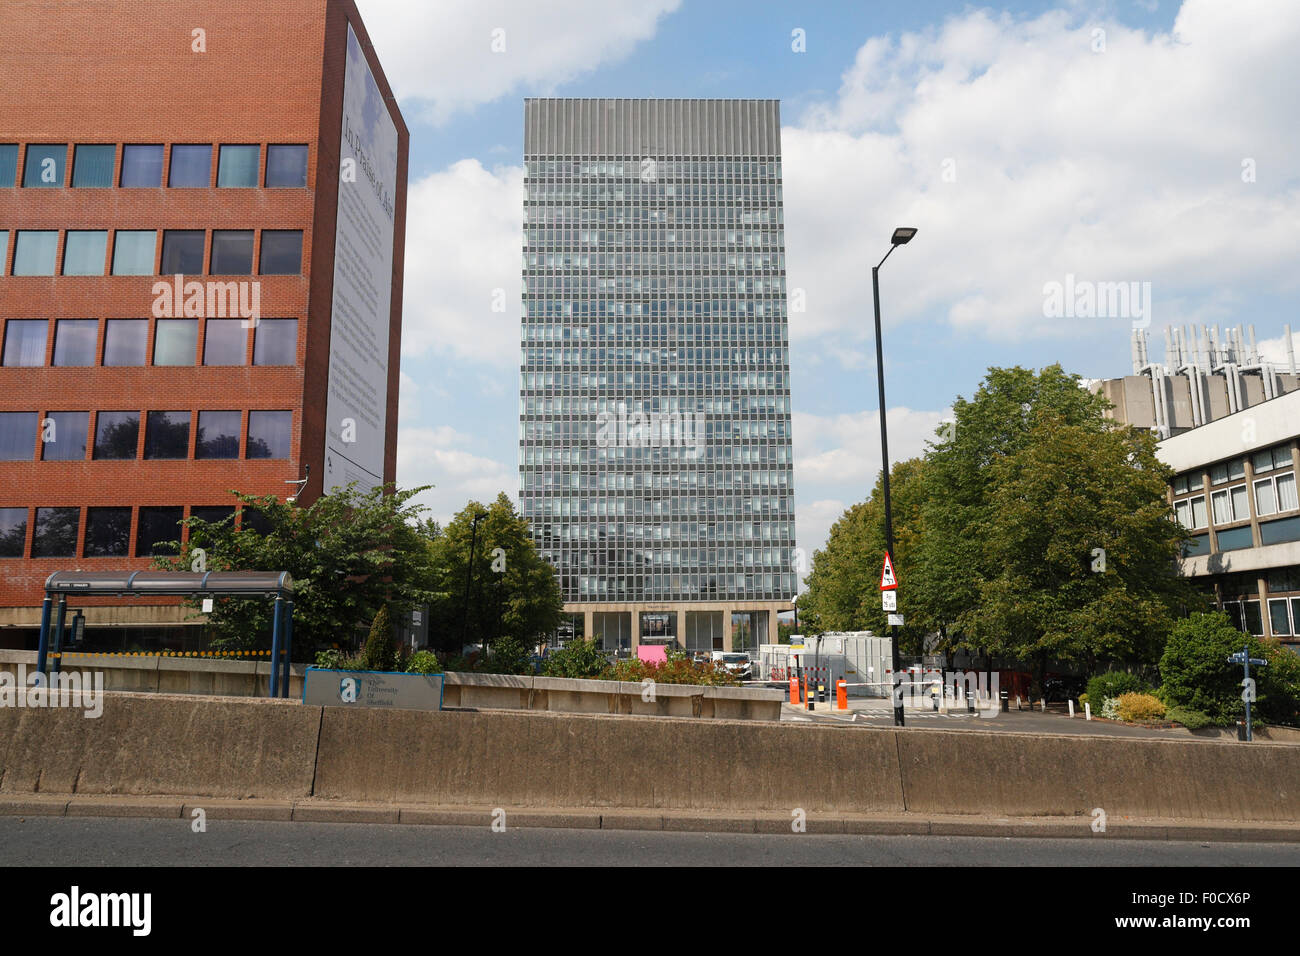 Sheffield University Arts Tower England UK. High rise building Stock Photo